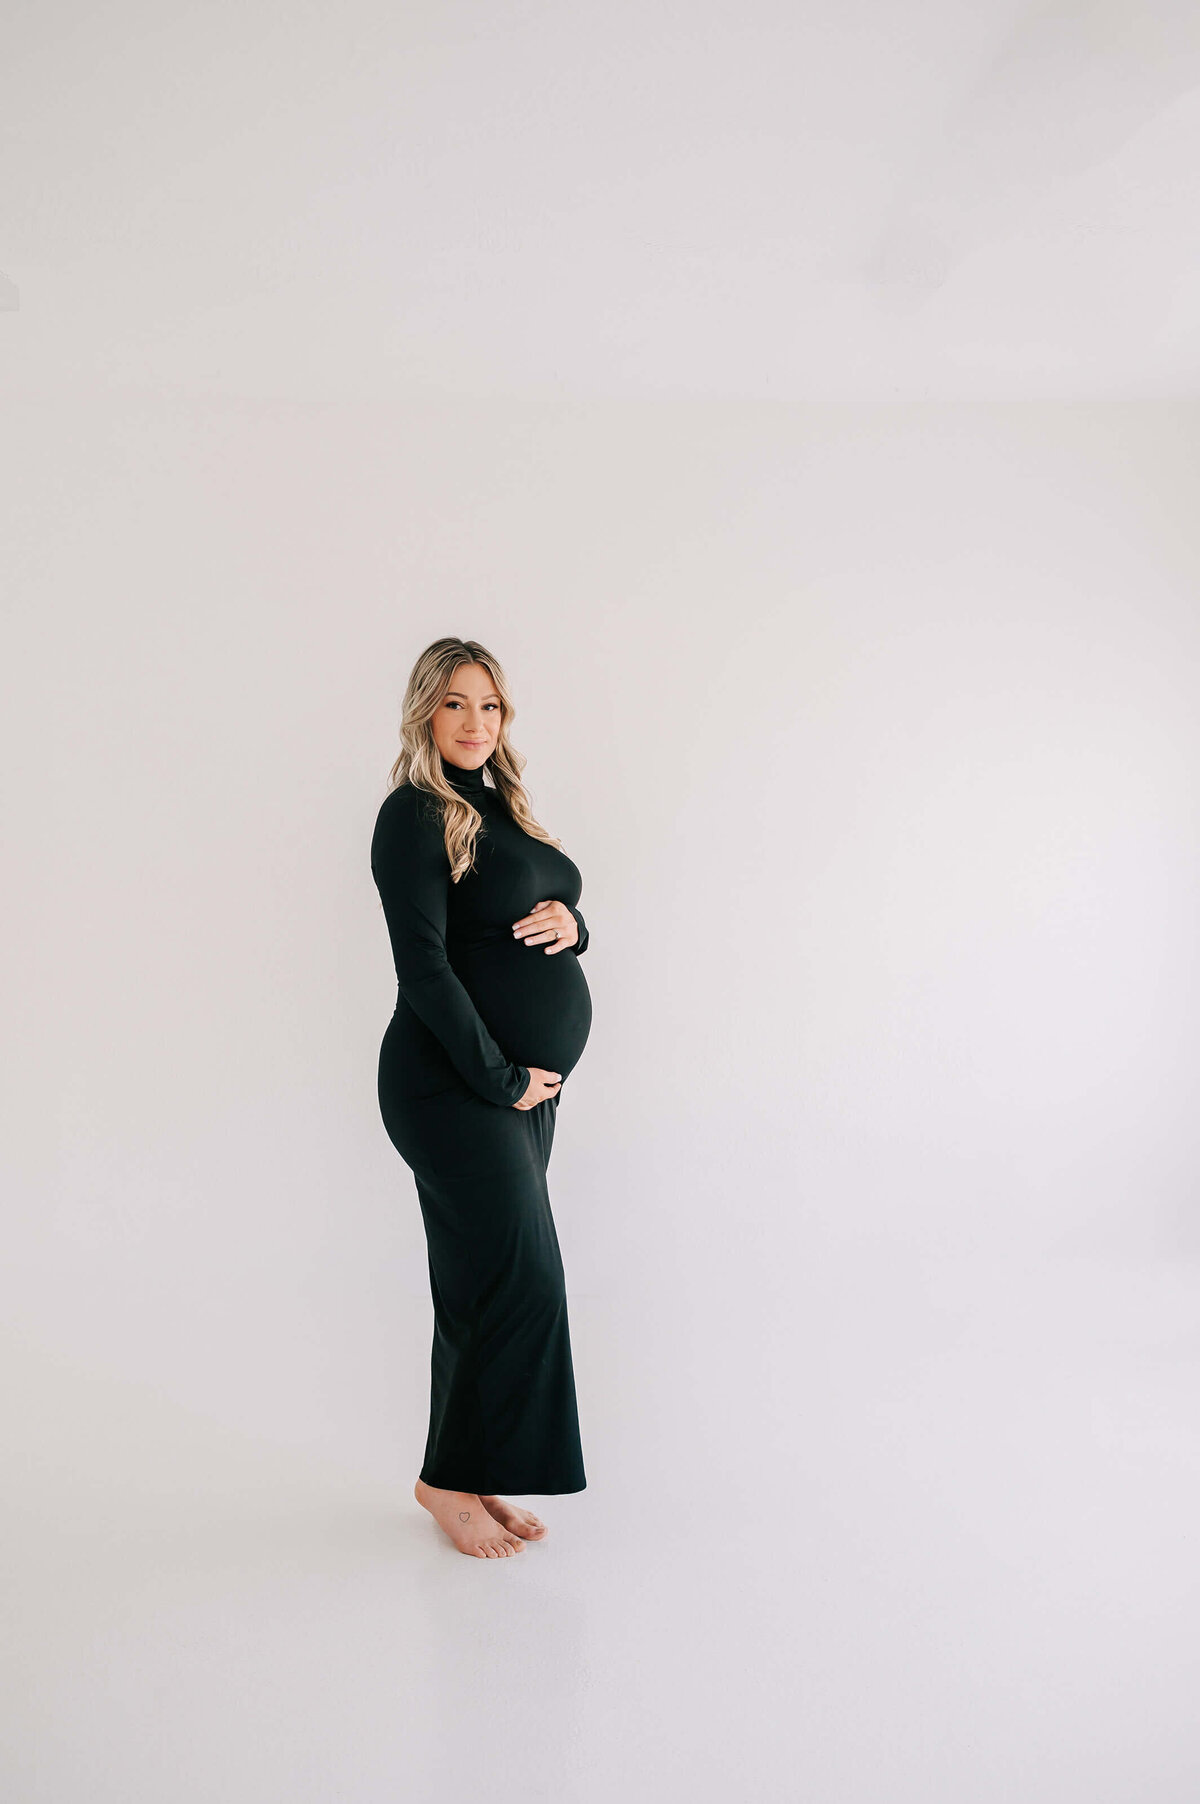 Branson maternity photographer captures pregnant mom hugging baby bump